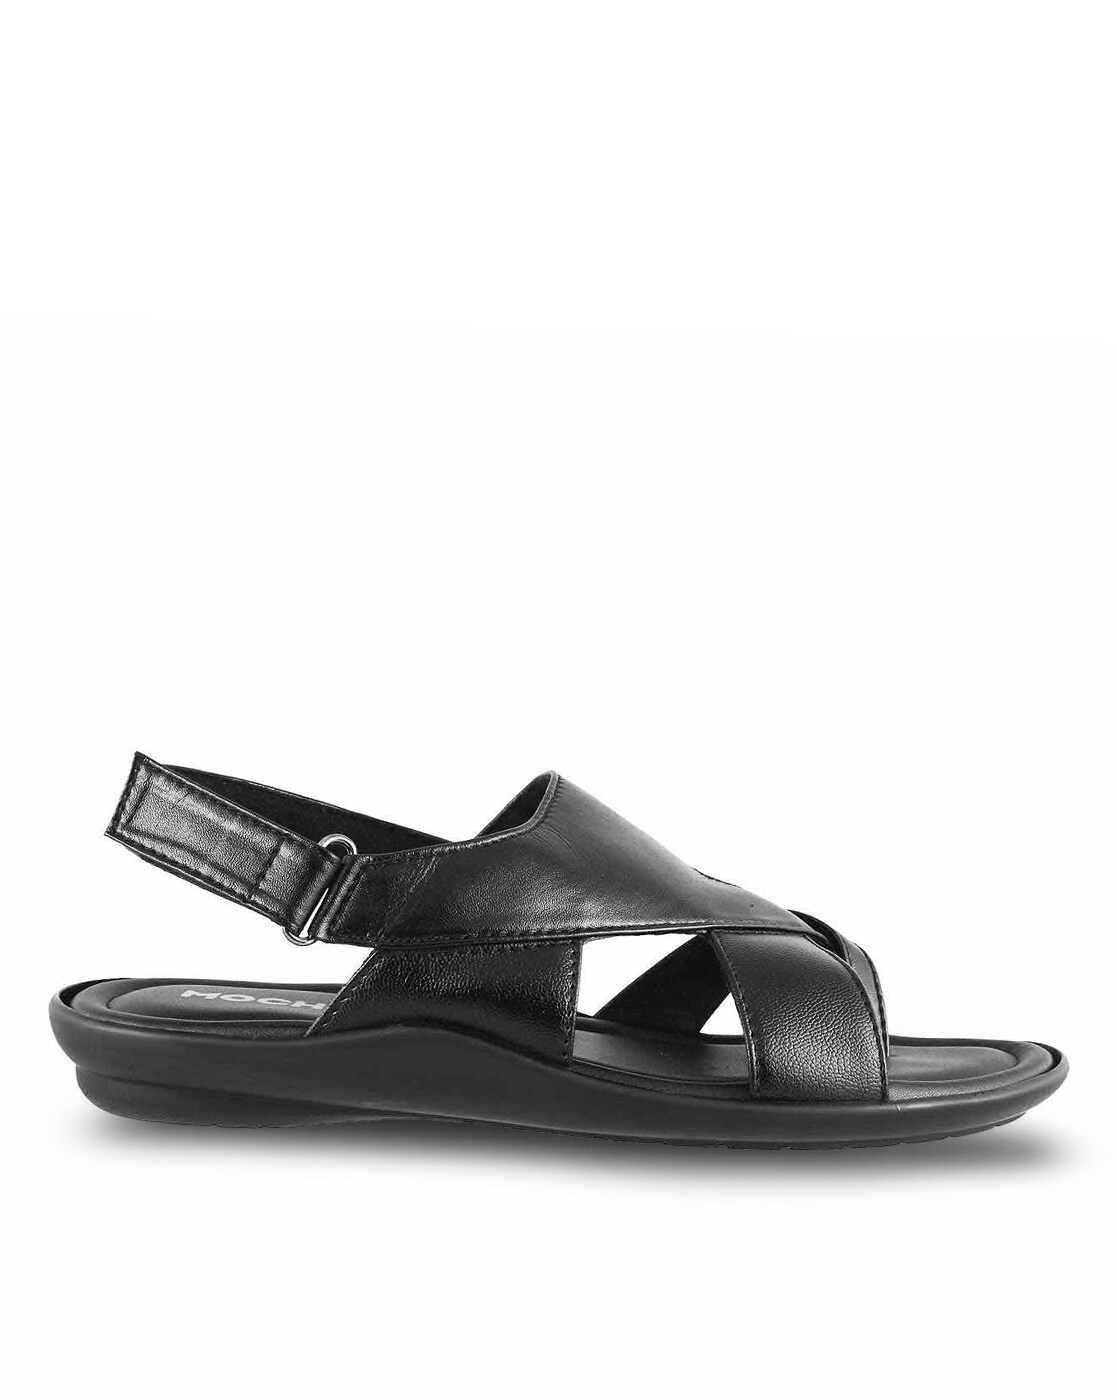 Buy Sandals by Online | Ajio.com